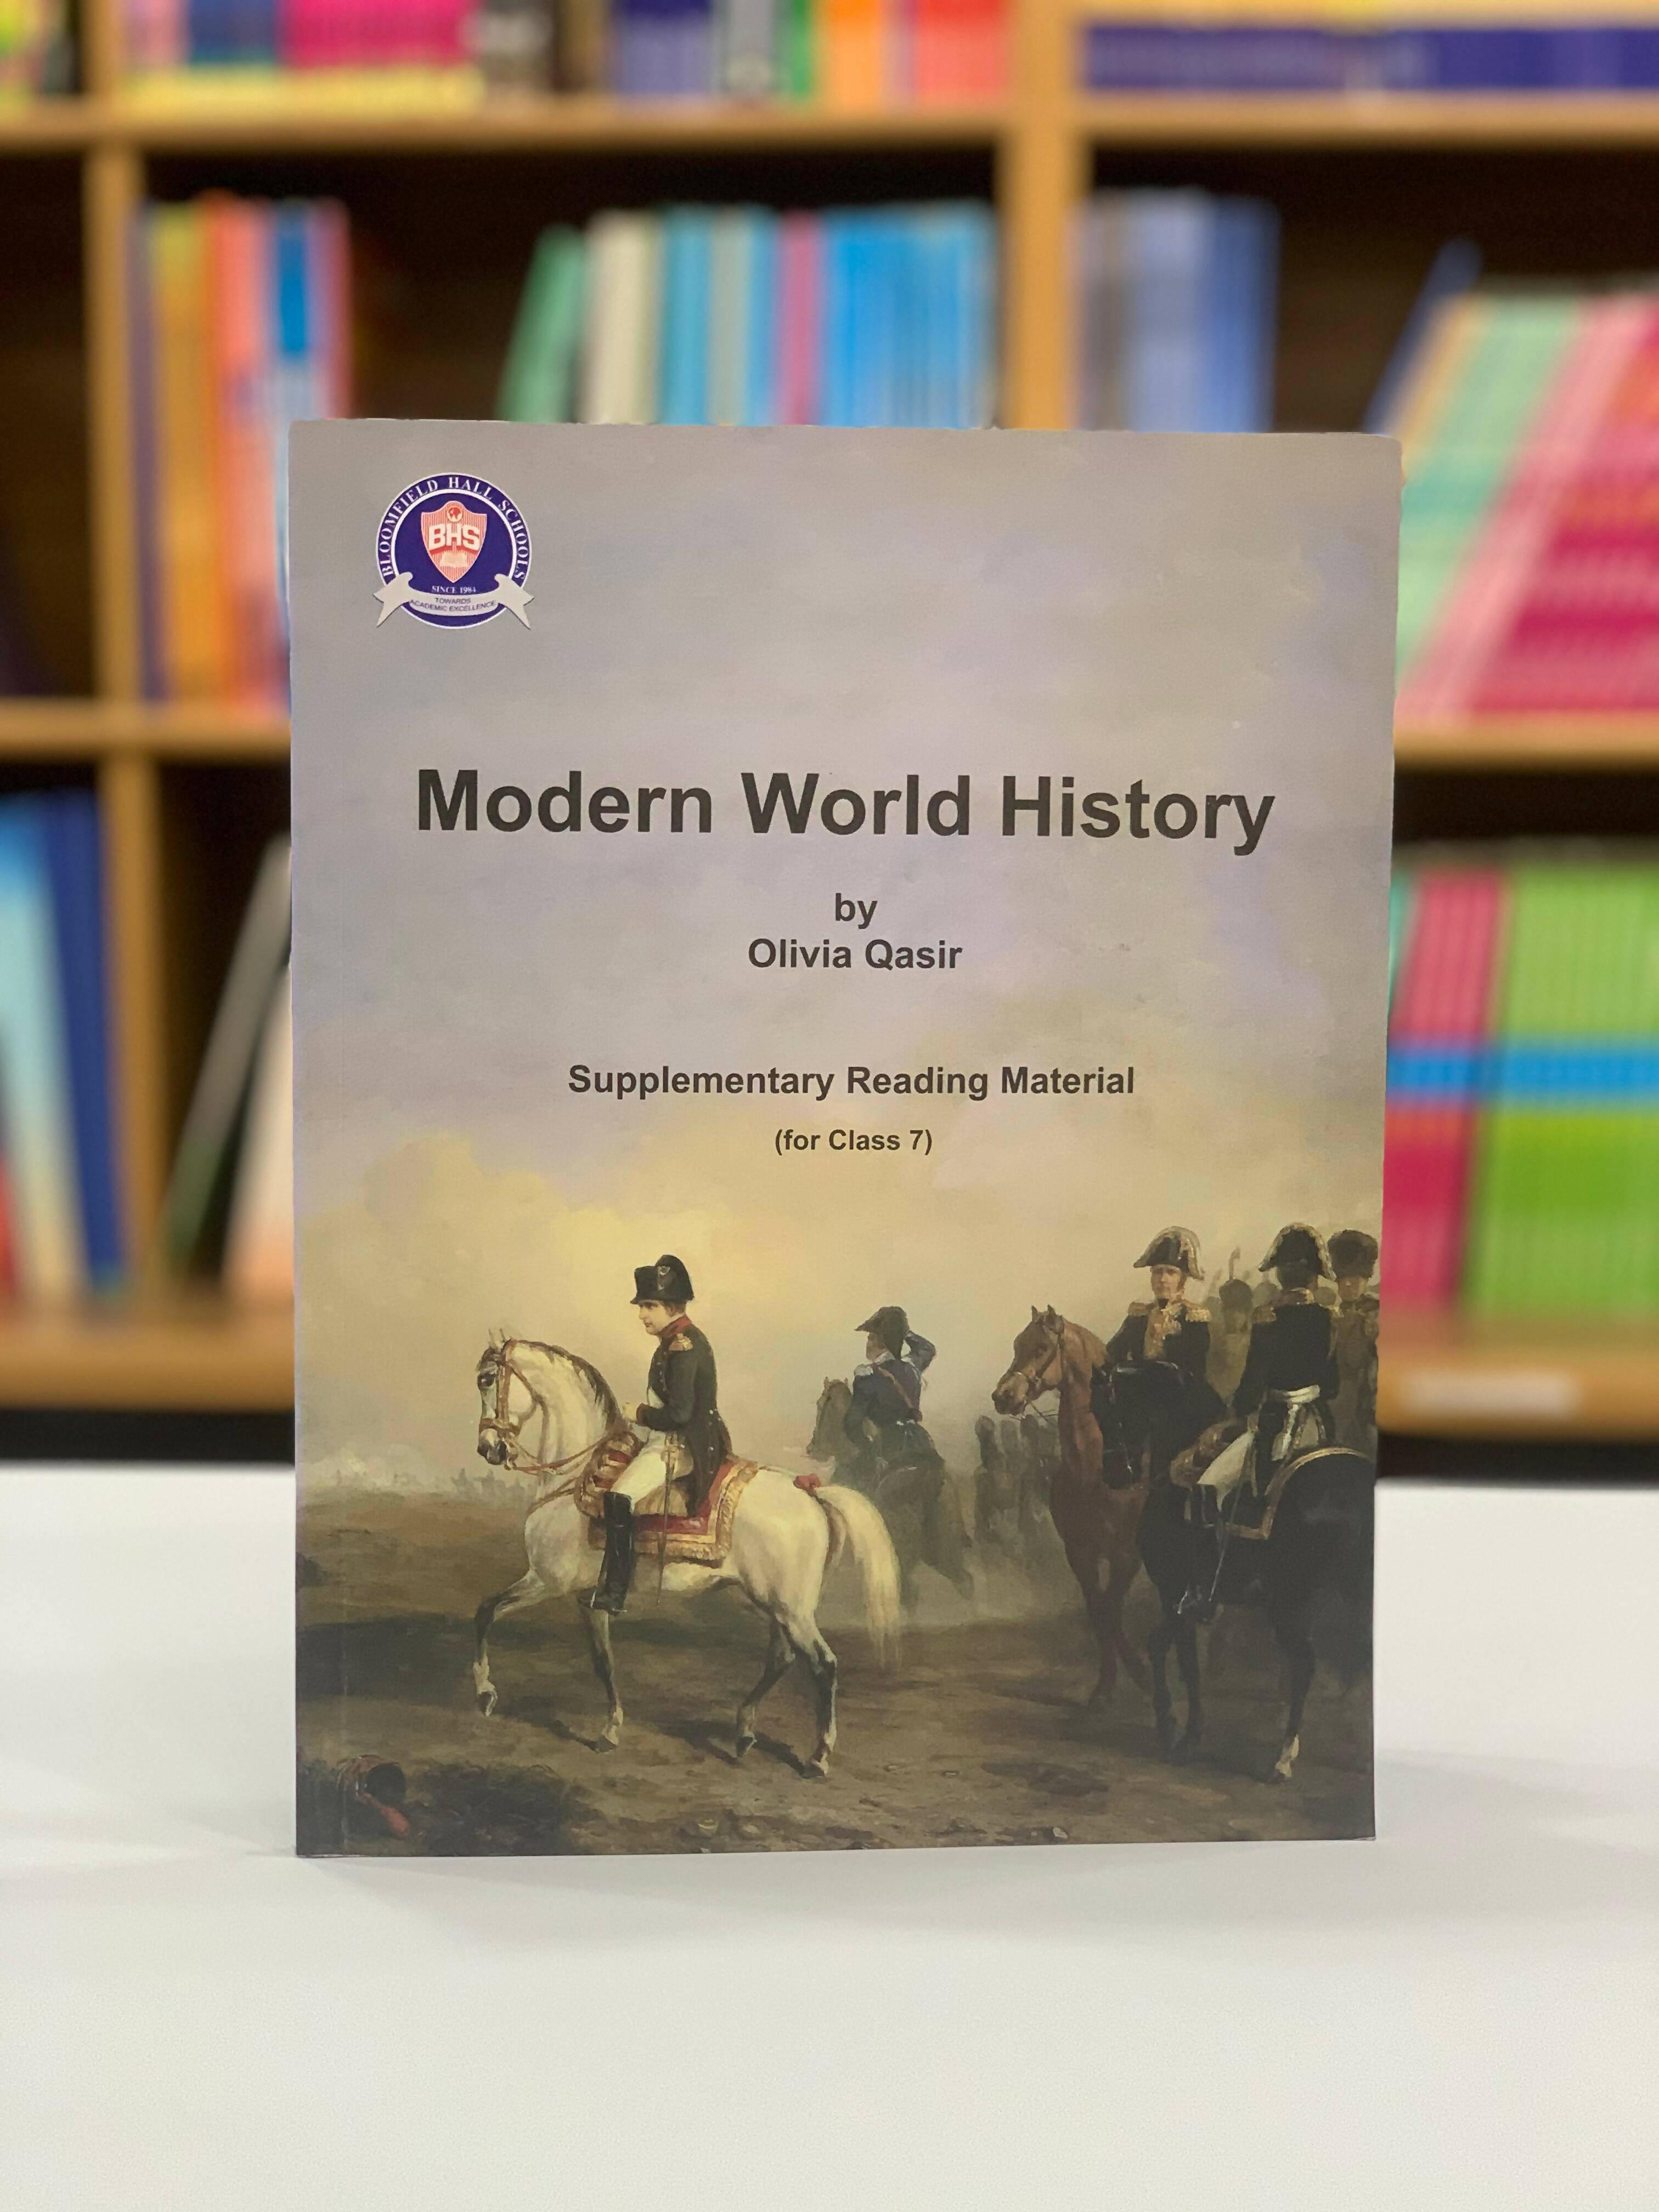 MODERN WORLD HISTORY BY OLIVIA QASIR (SRM) FOR CLASS 7 BLOOMFIELD HALL SCHOOL - ValueBox